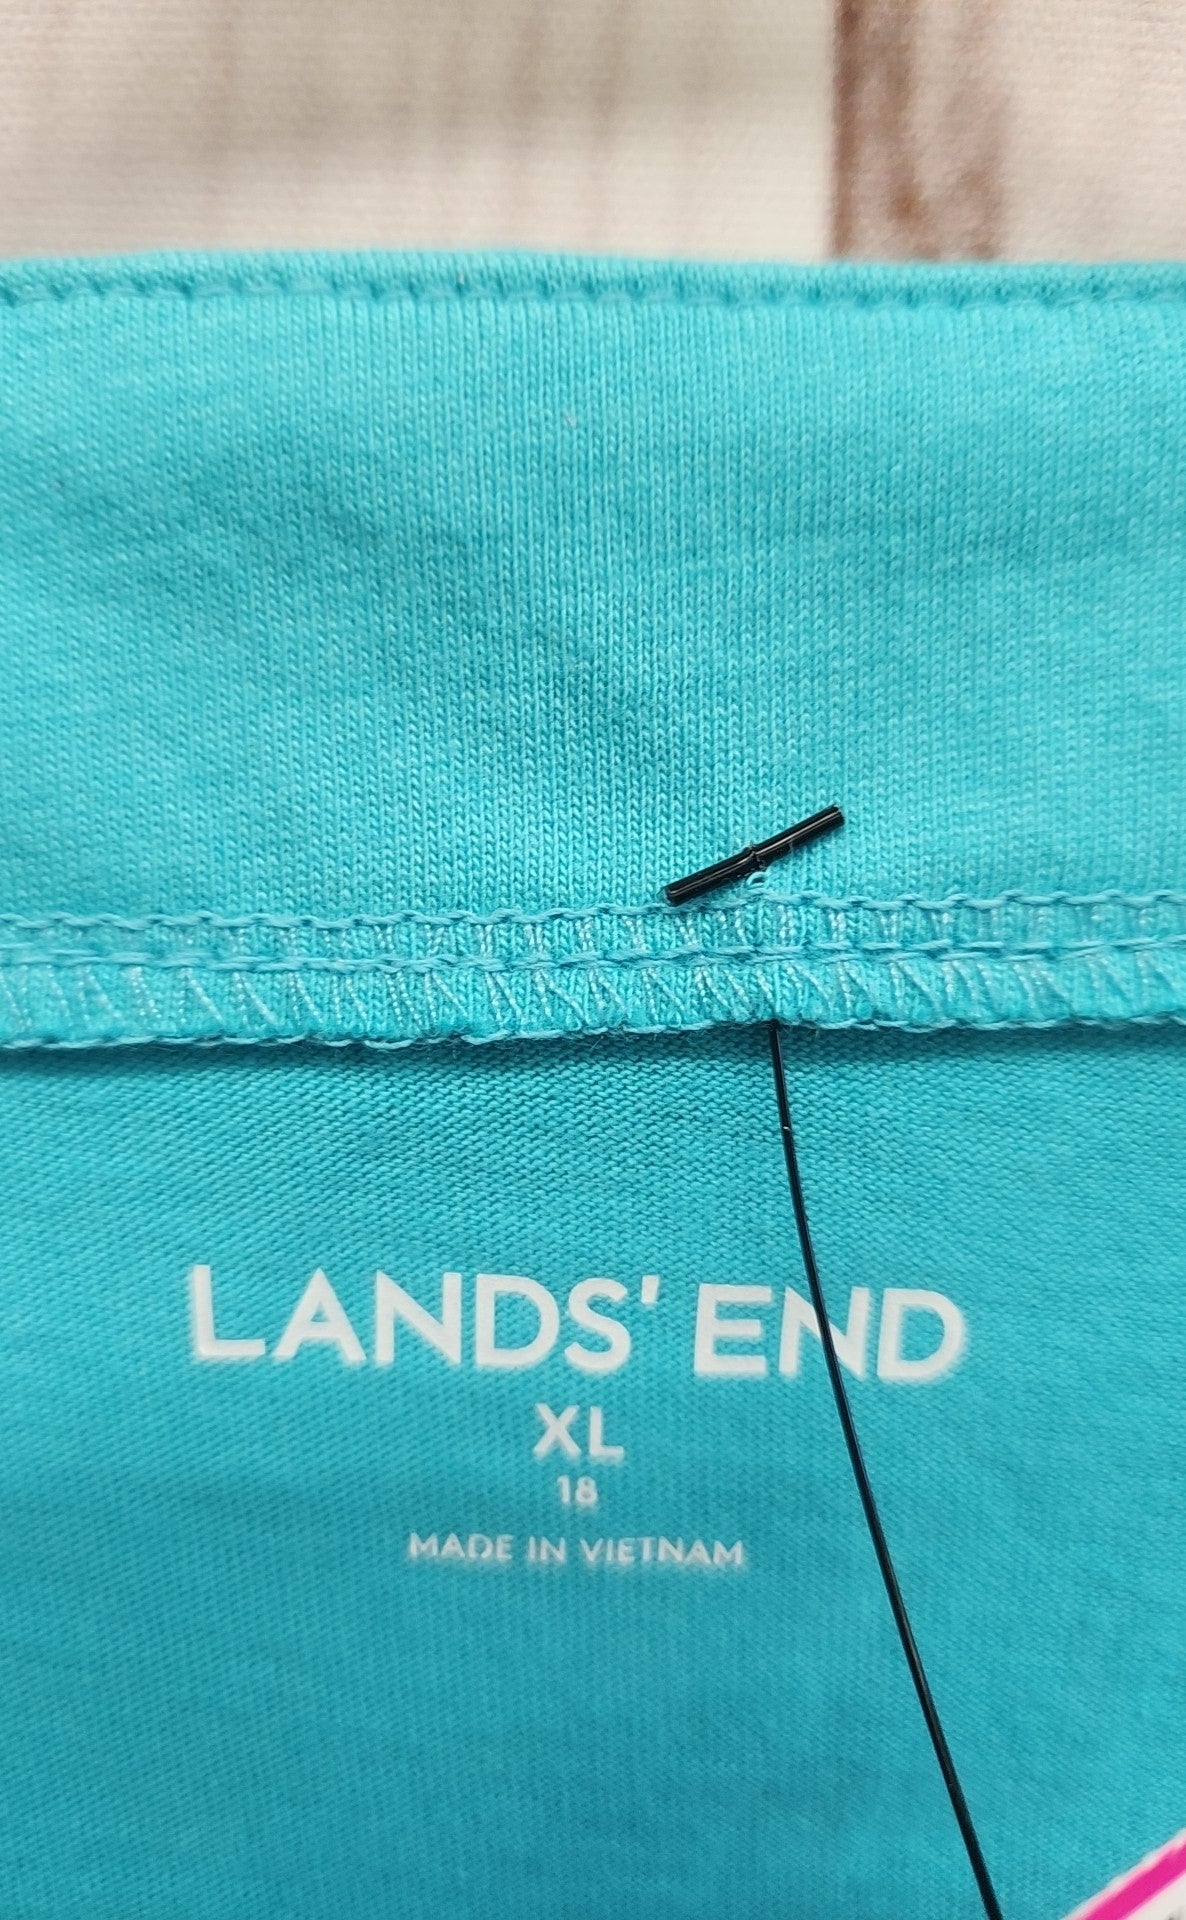 Lands End Women's Size XL Turquoise Dress